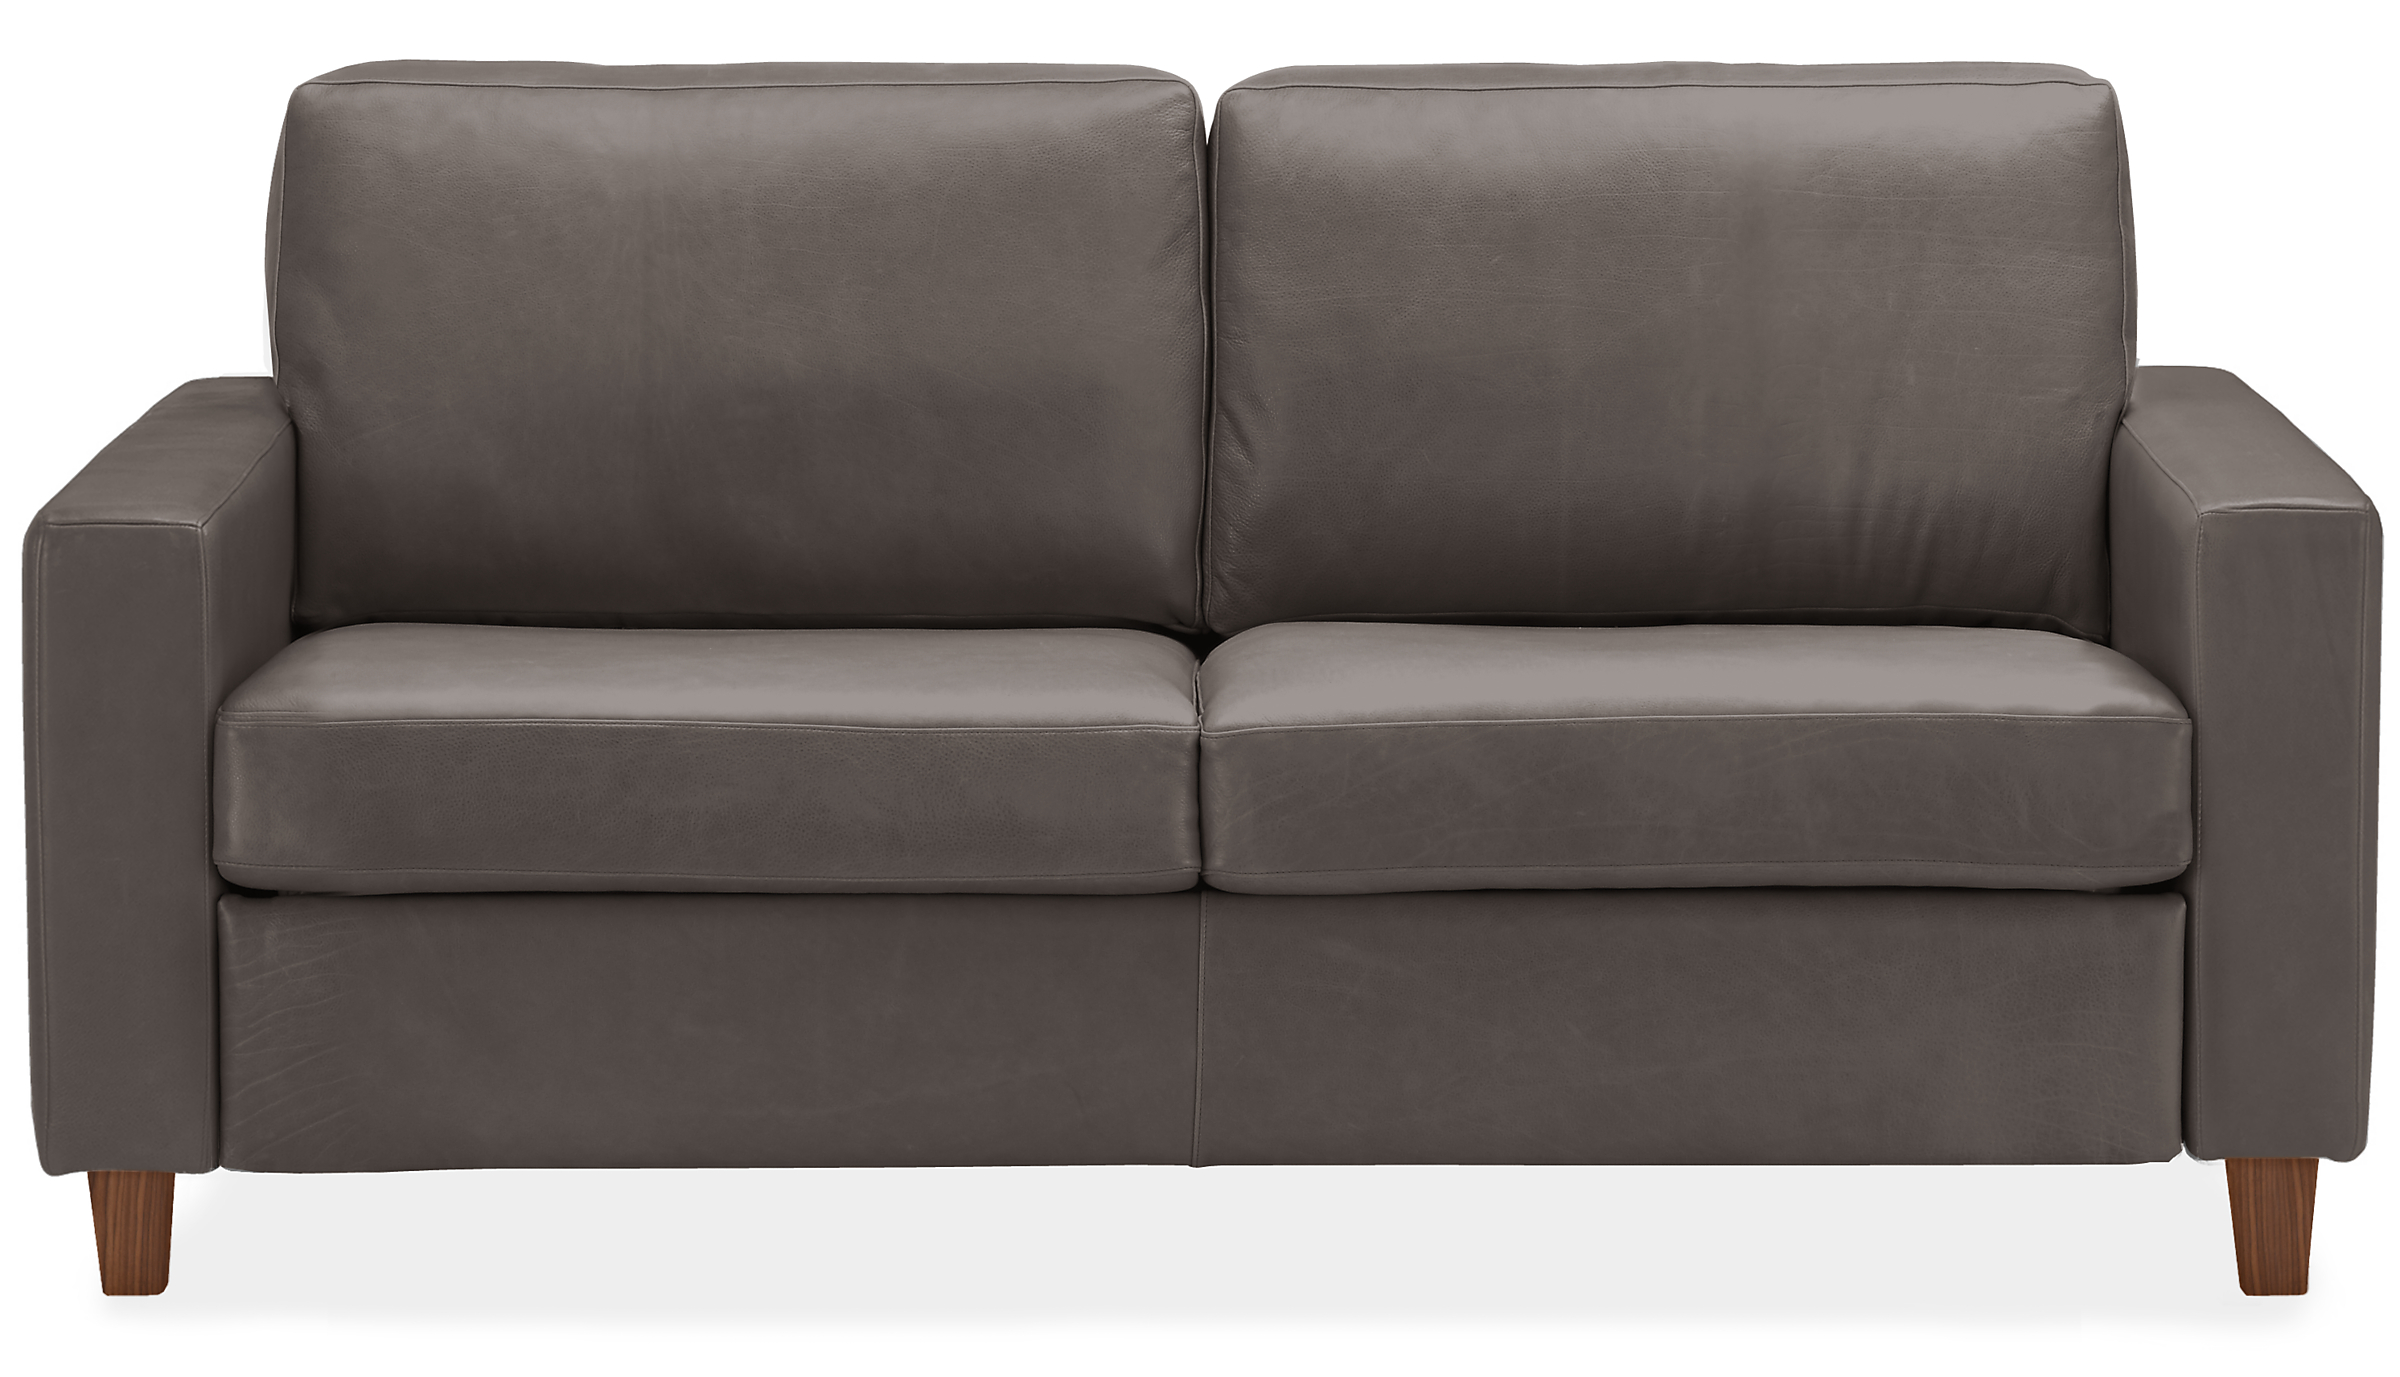 Berin Leather Day & Night Sleeper Sofa